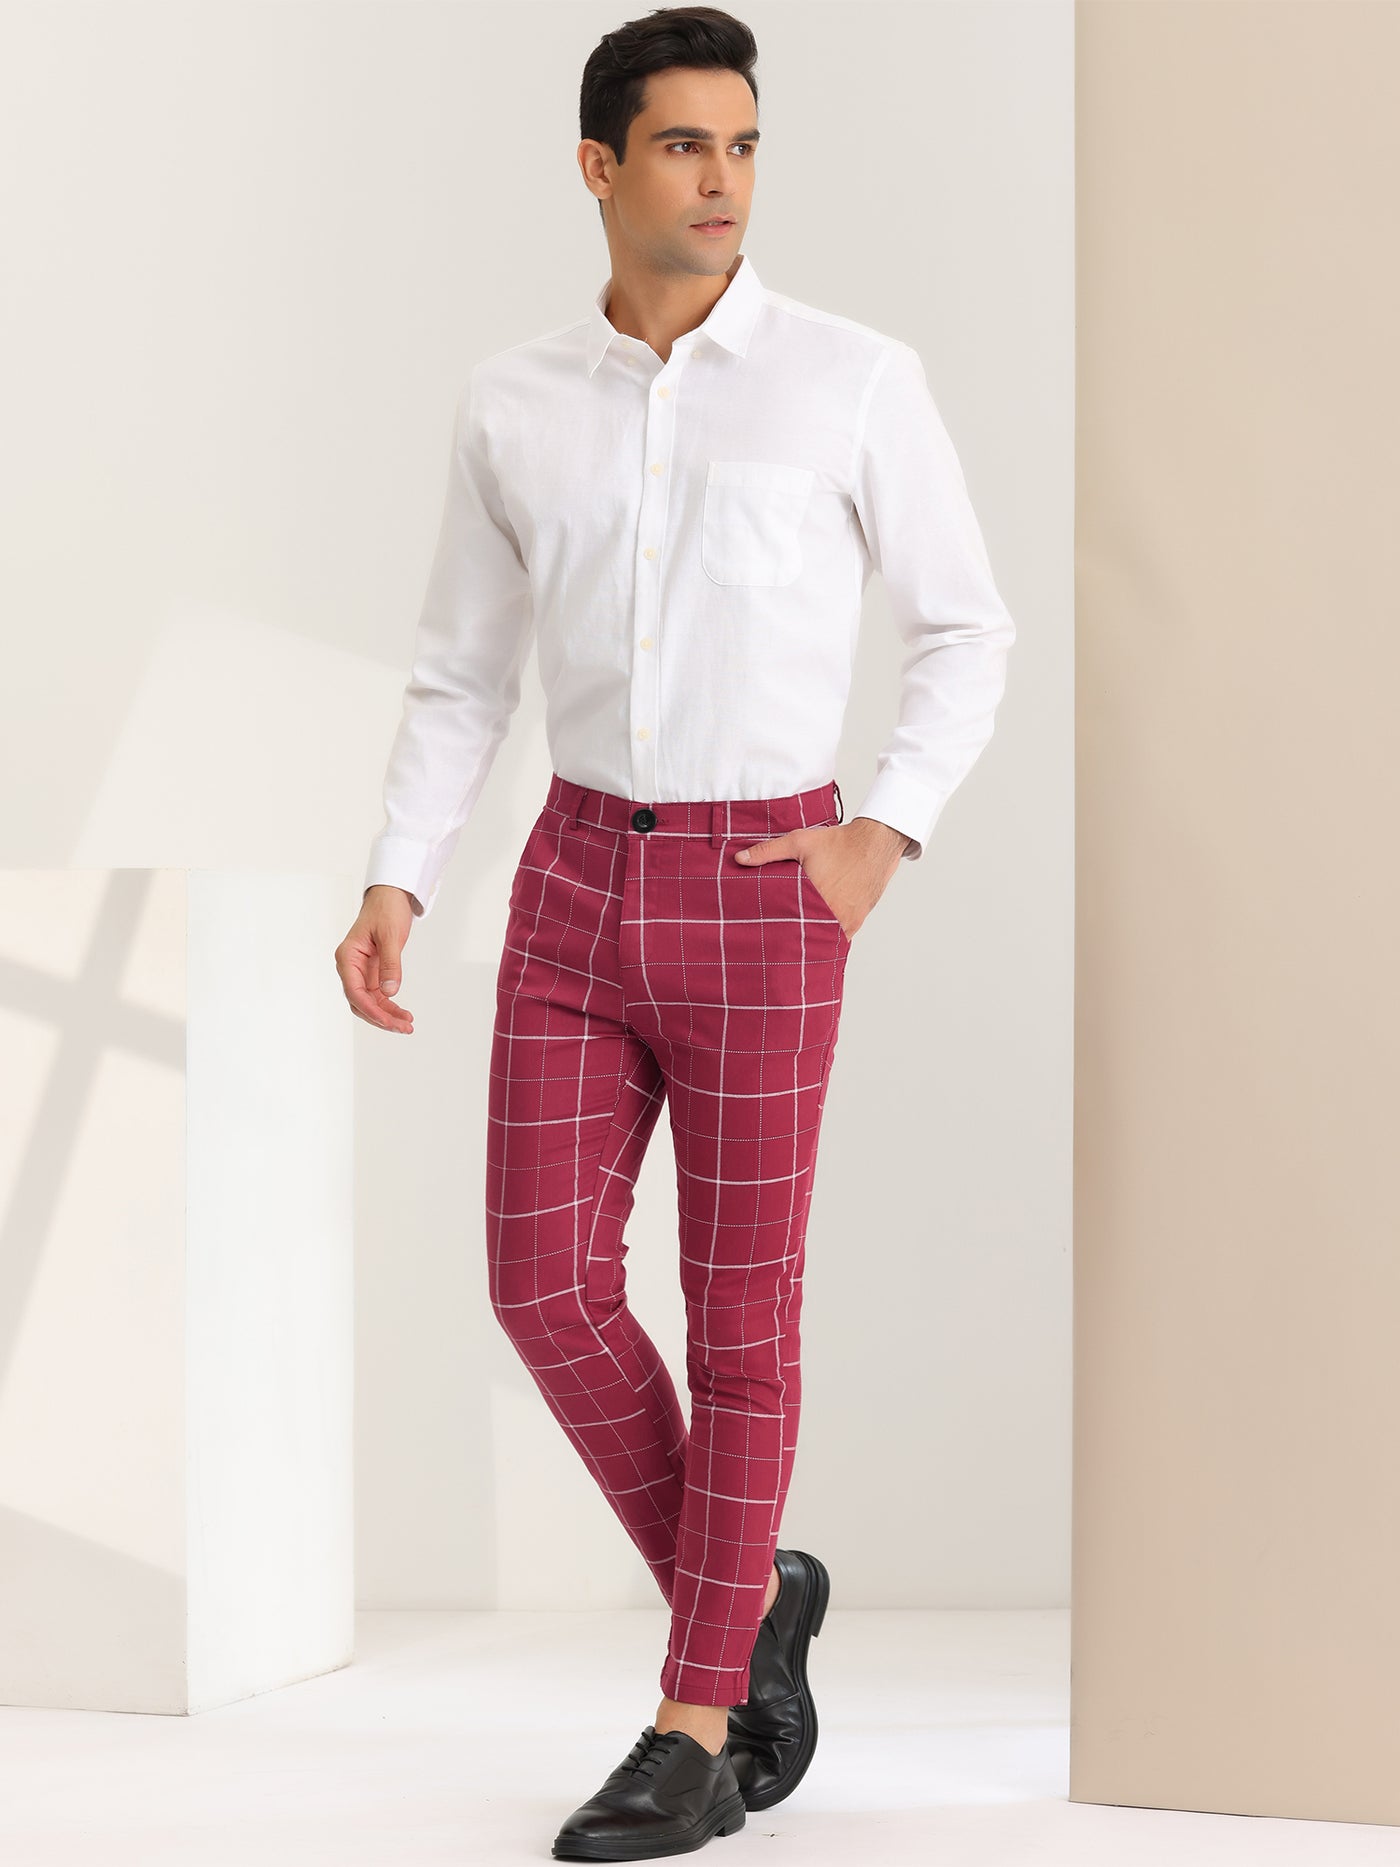 Bublédon Men's Dress Plaid Pants Slim Fit Flat Front Business Work Checked Trousers